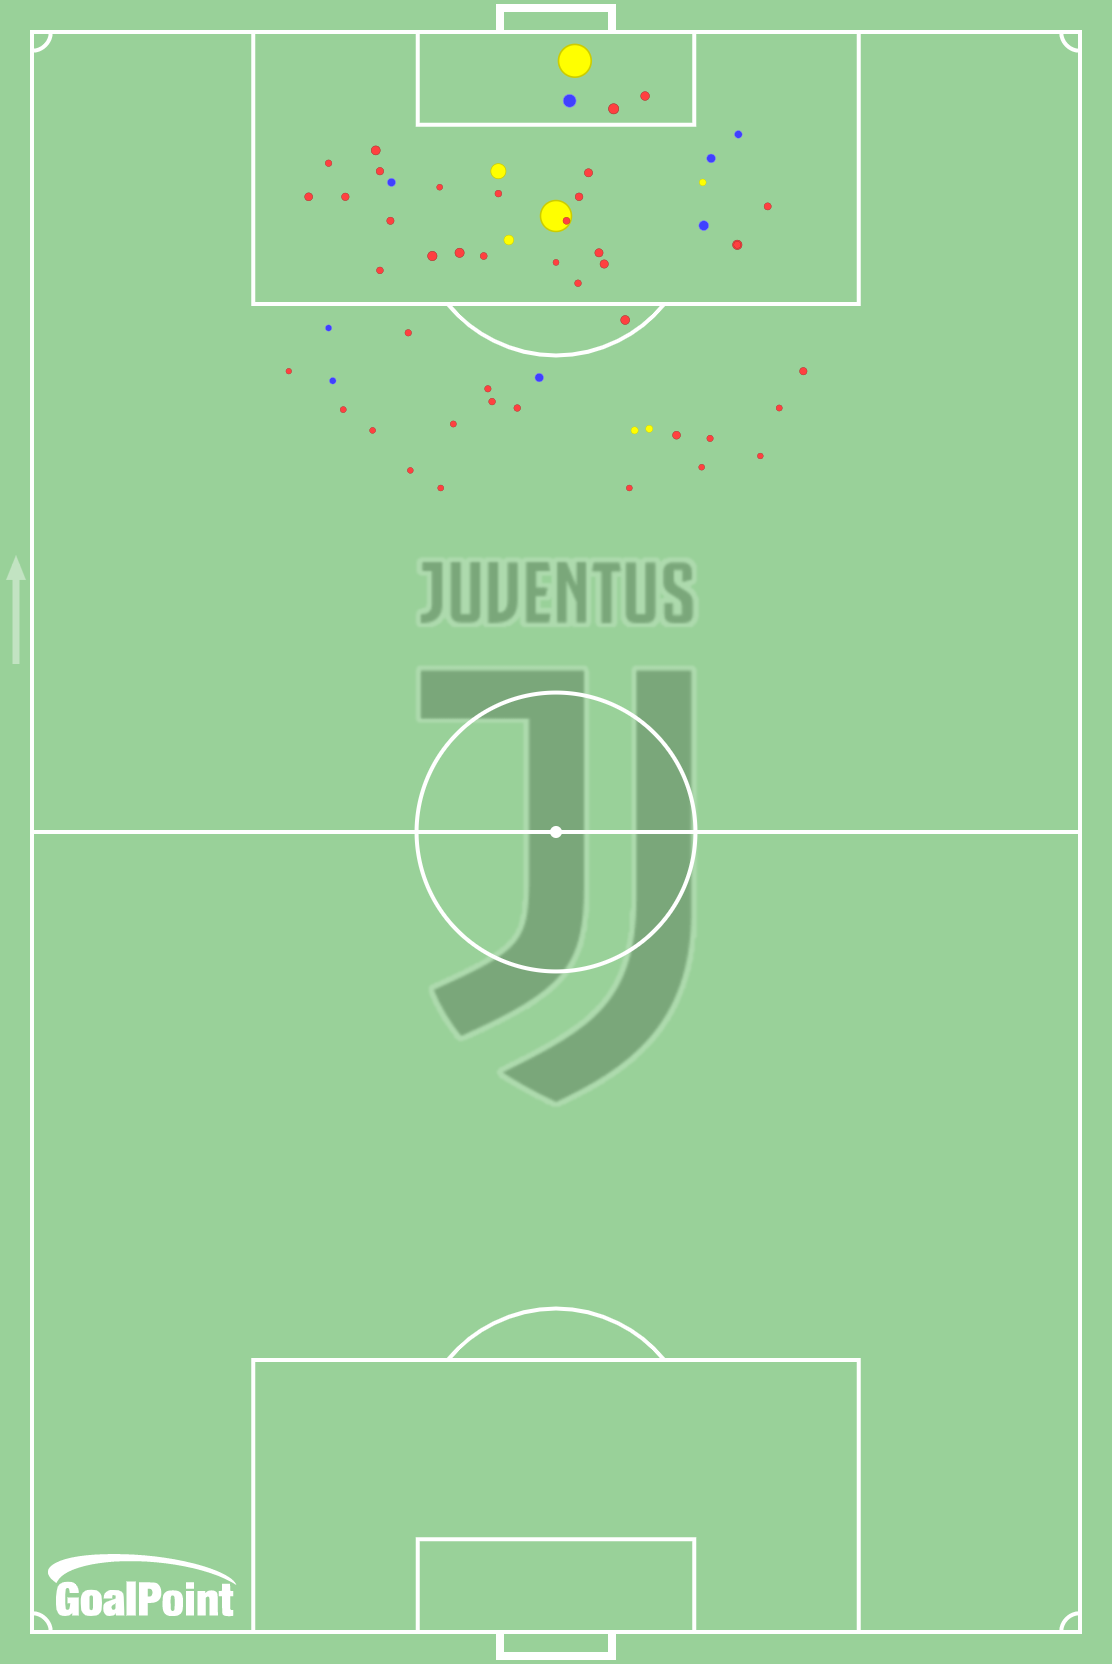 GoalPoint-Juventus-Shots-xG-SerieA-J5-202223